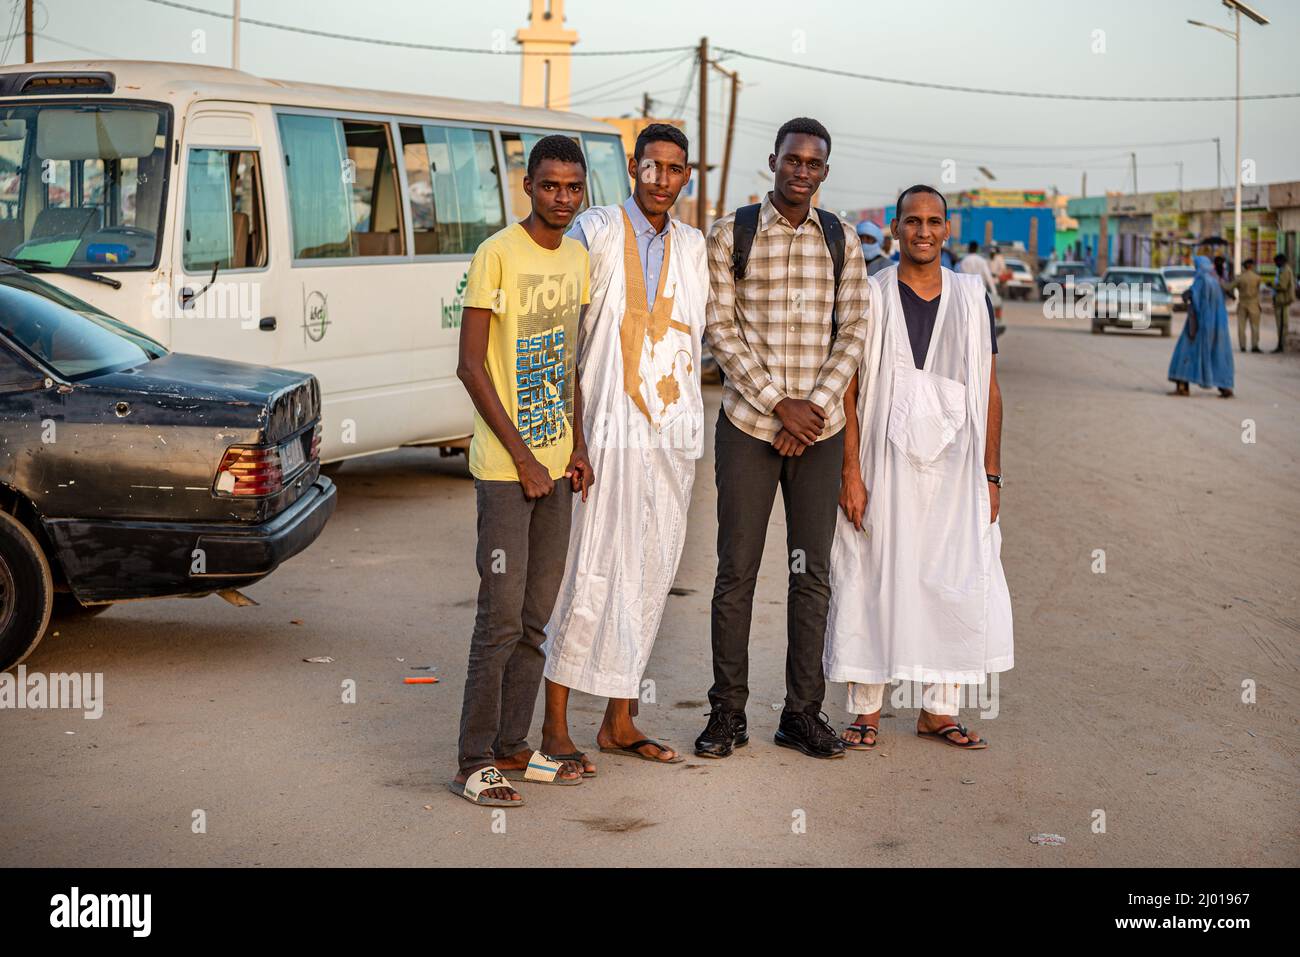 Cuatro jóvenes de diferentes etnias que se presentan para un cuadro de grupo, Atar, Mauritania Foto de stock